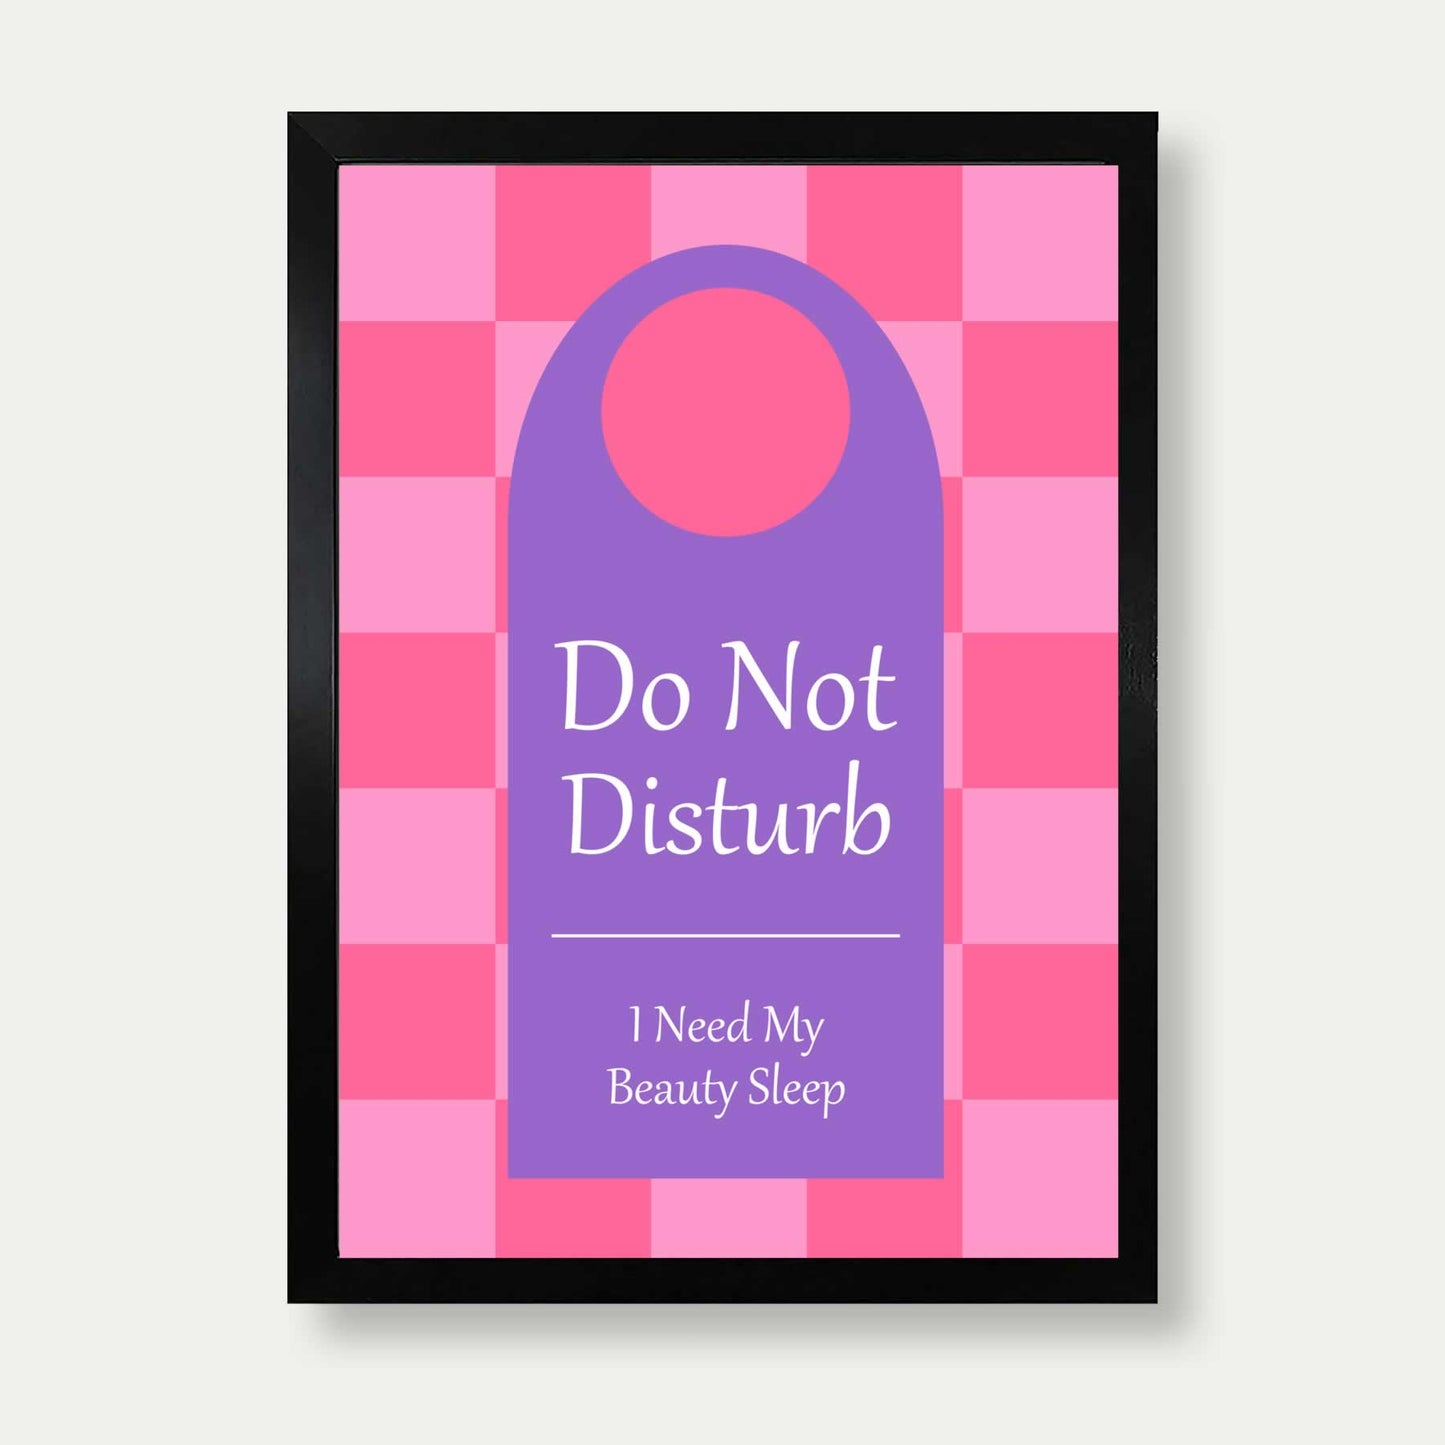 Do Not disturb print for bedroom